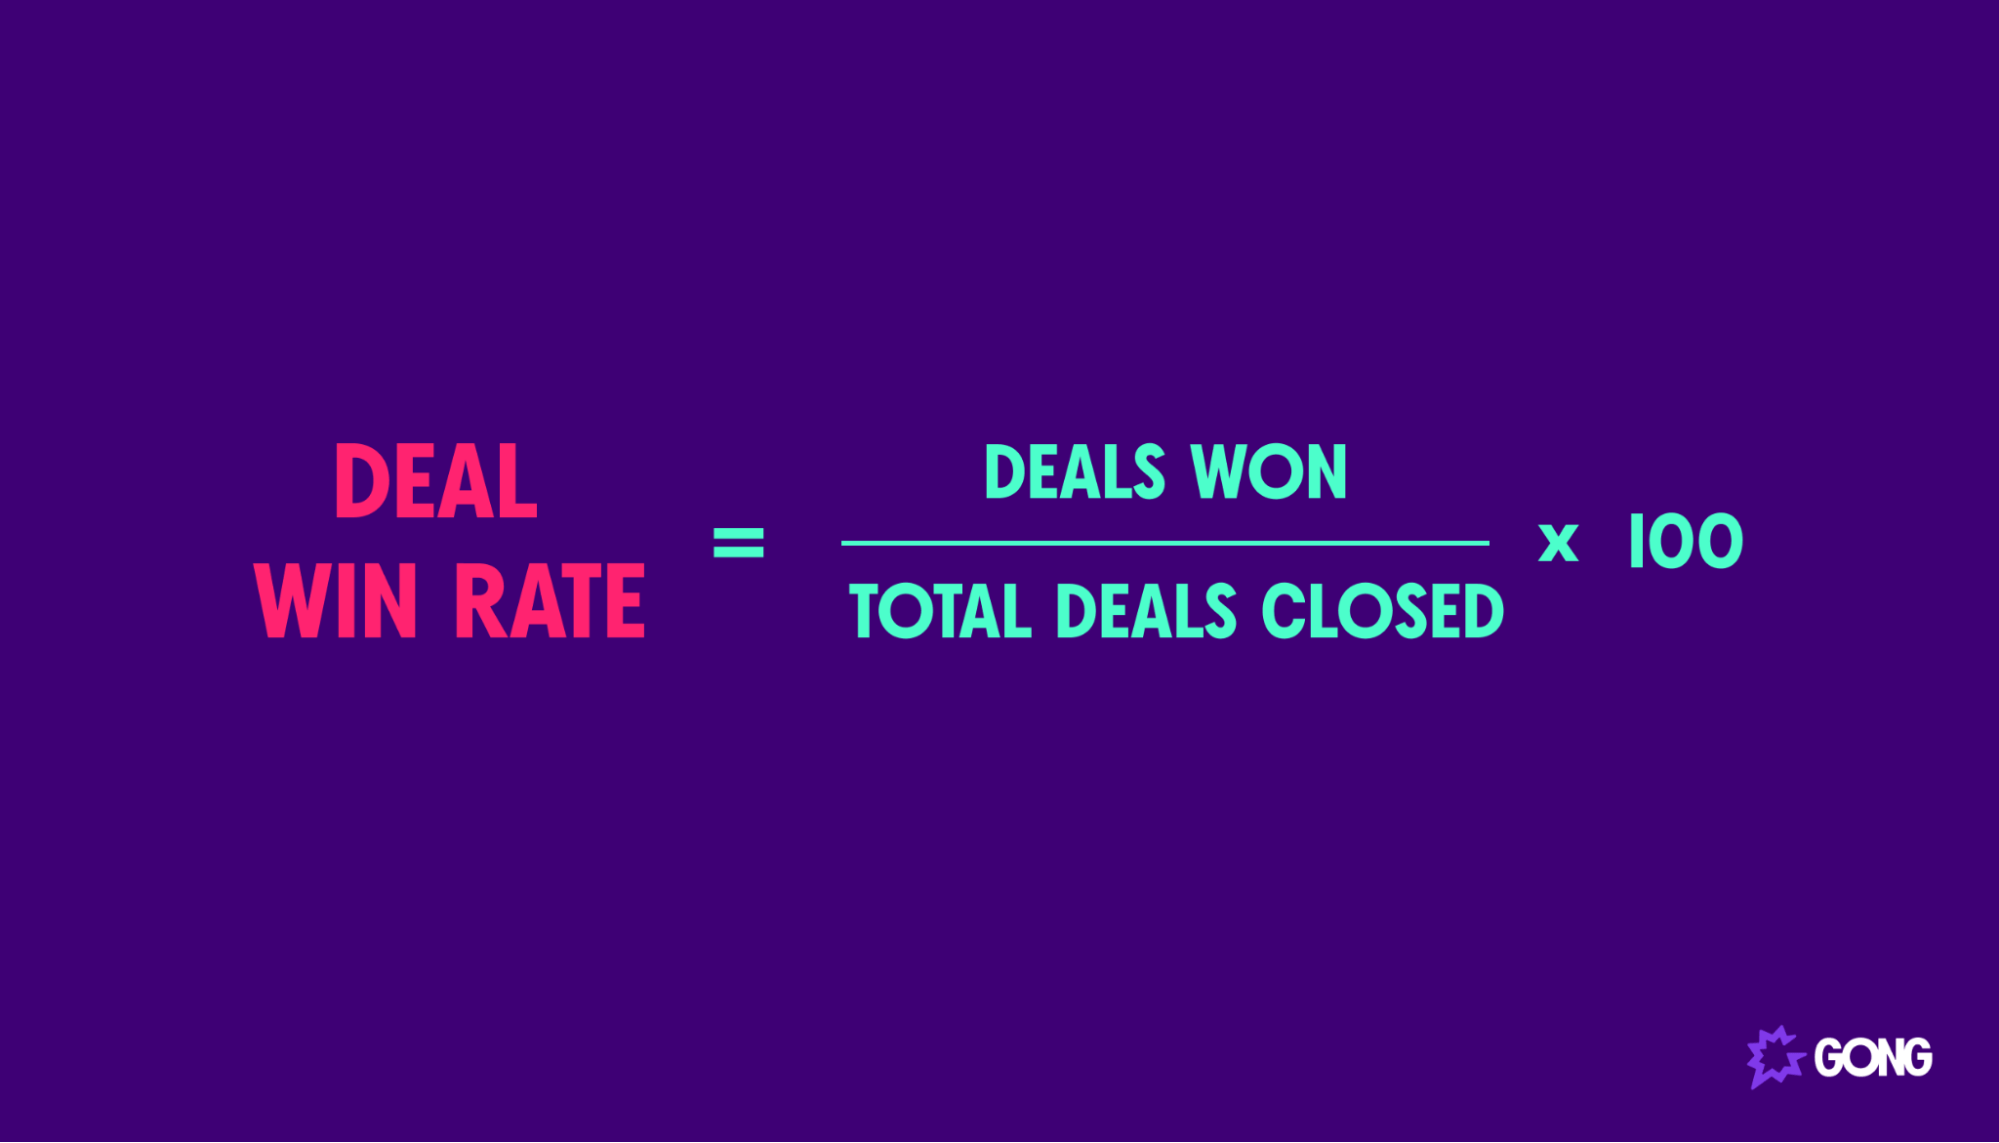 Deal win rate formula